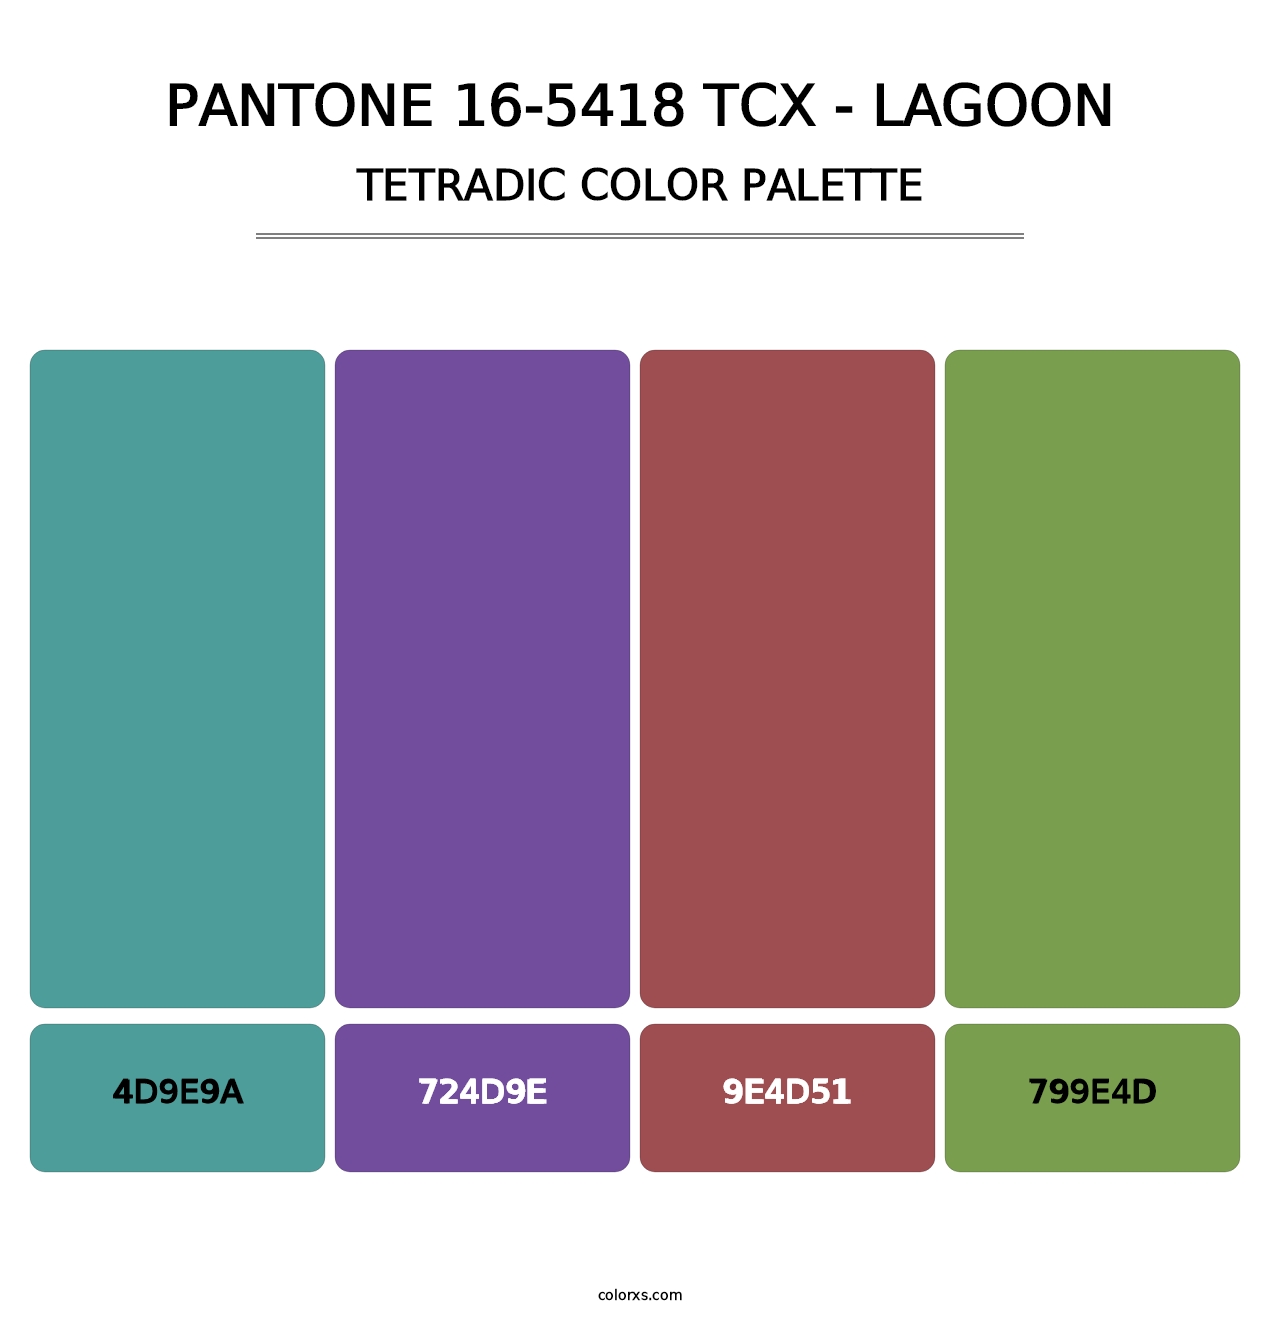 PANTONE 16-5418 TCX - Lagoon - Tetradic Color Palette